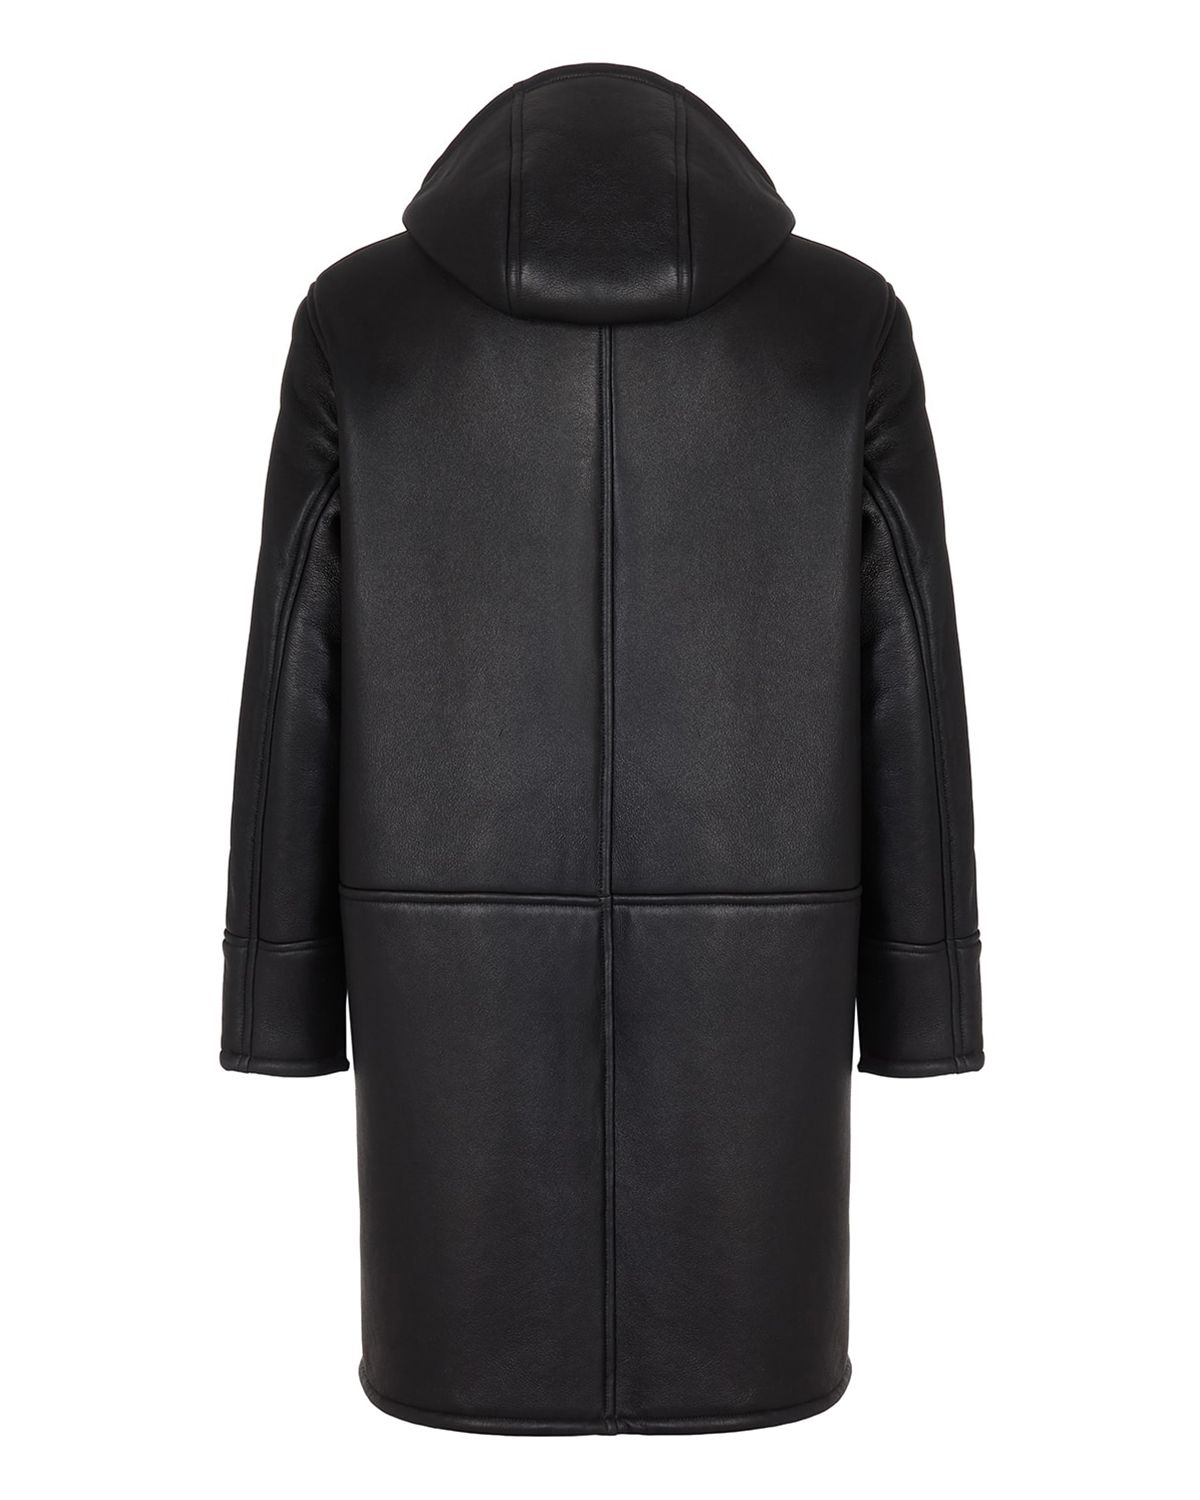 Black Hooded Leather Coat | Elite Jacket